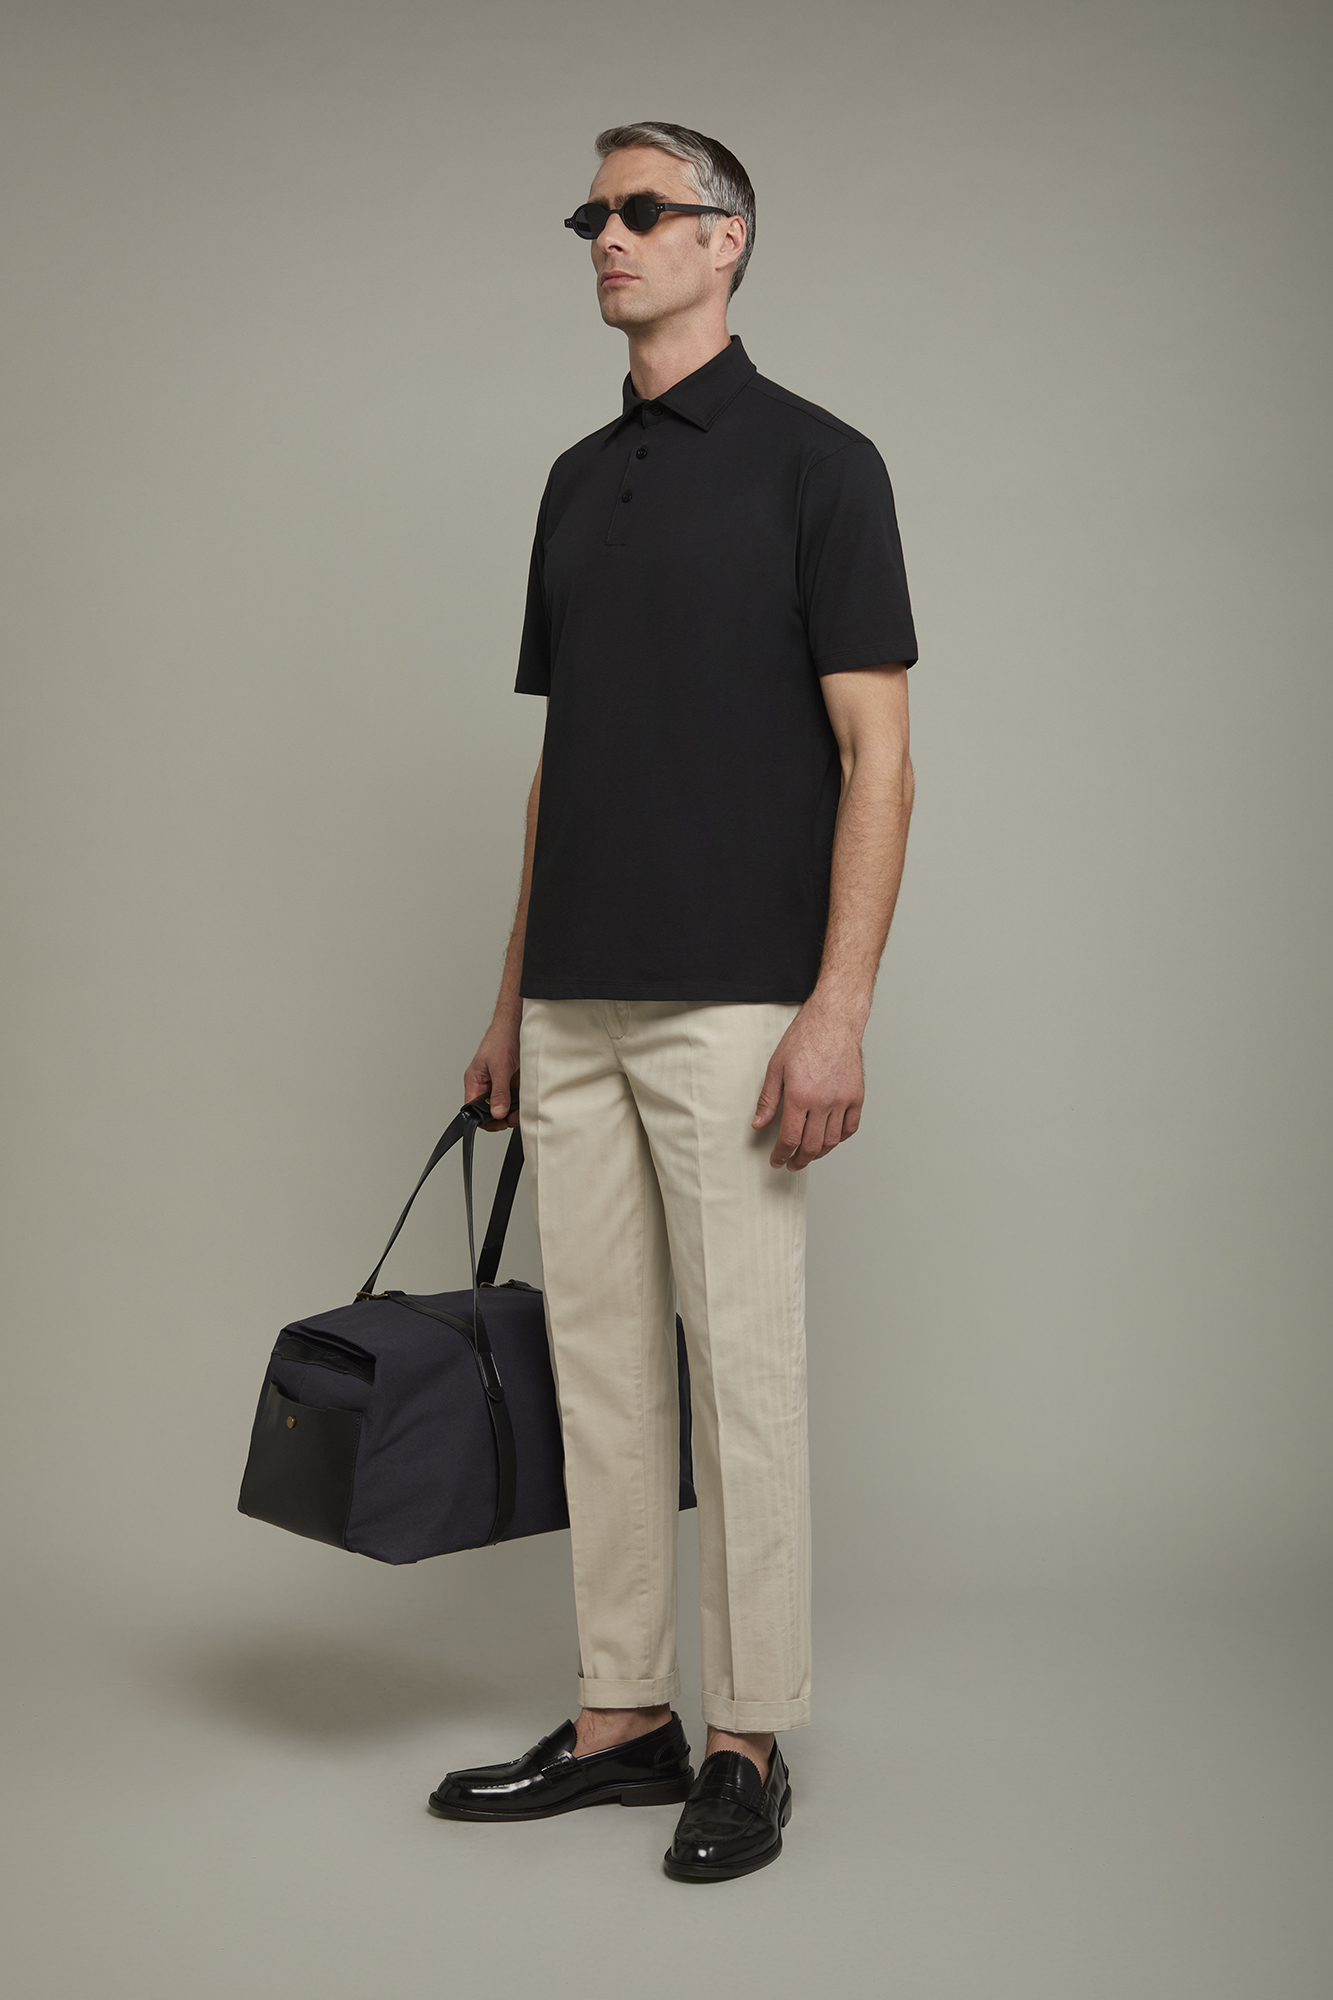 Men’s polo shirt short sleeves 100% supima cotton regular fit ...